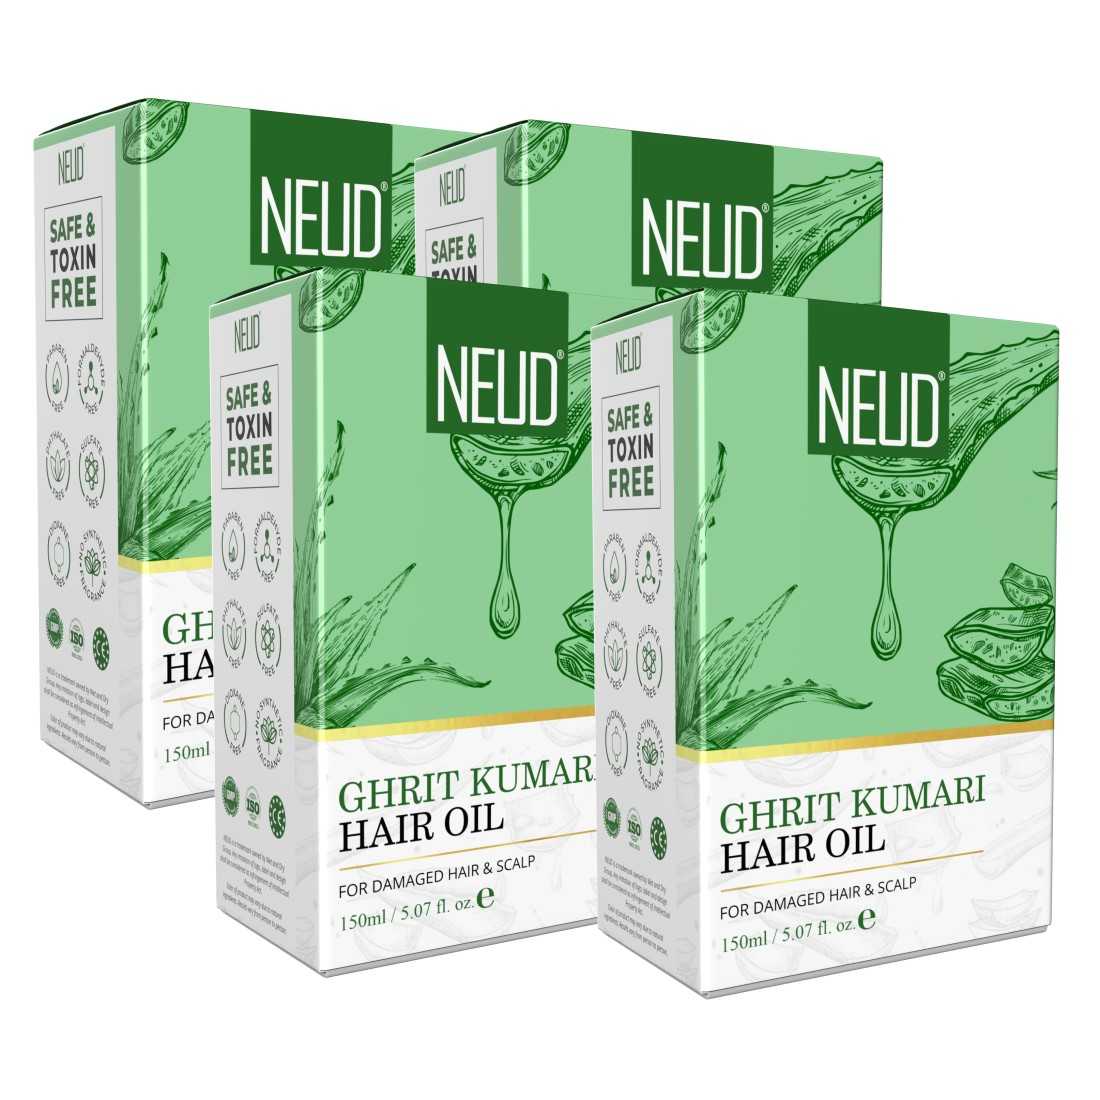 NEUD Premium Ghrit Kumari Hair Oil for Men & Women